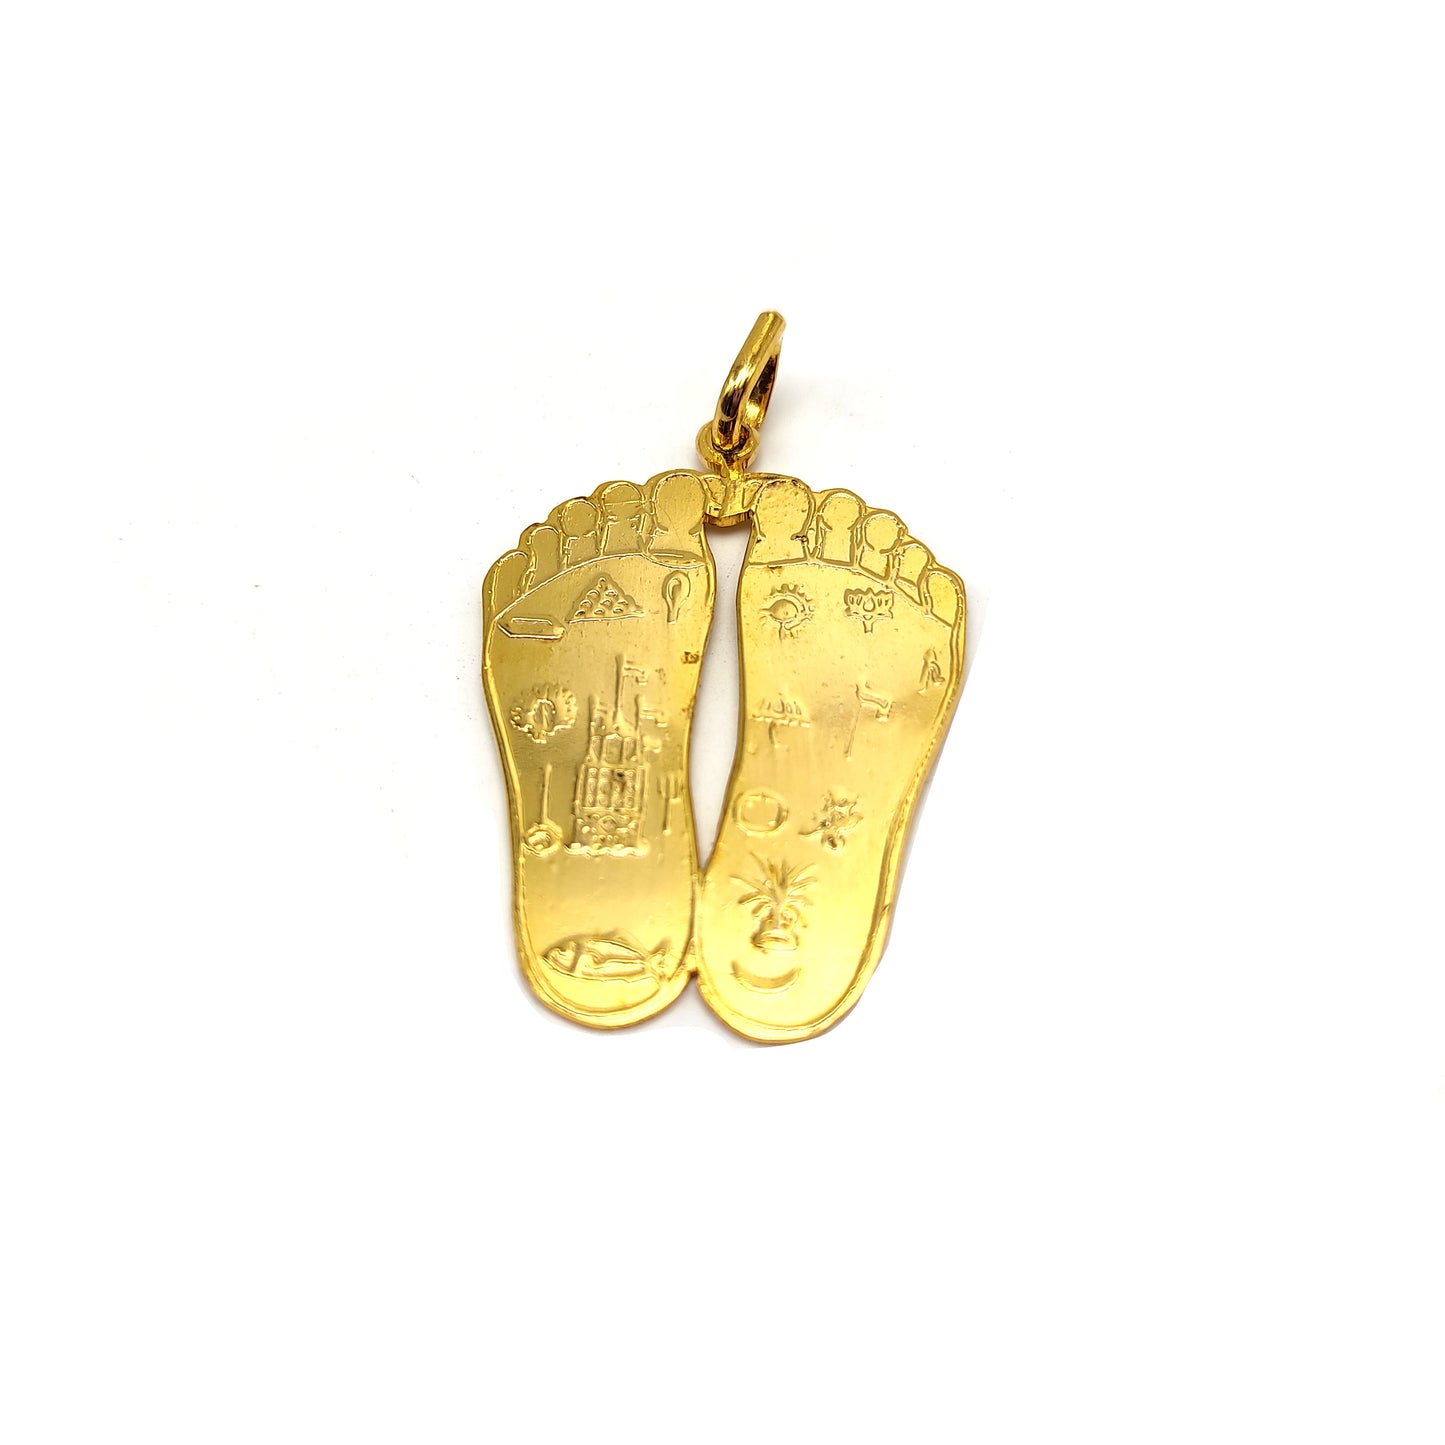 Srimate Radharani Lotus Feet Gold-tone Pendant Handmade India 1.25" Long